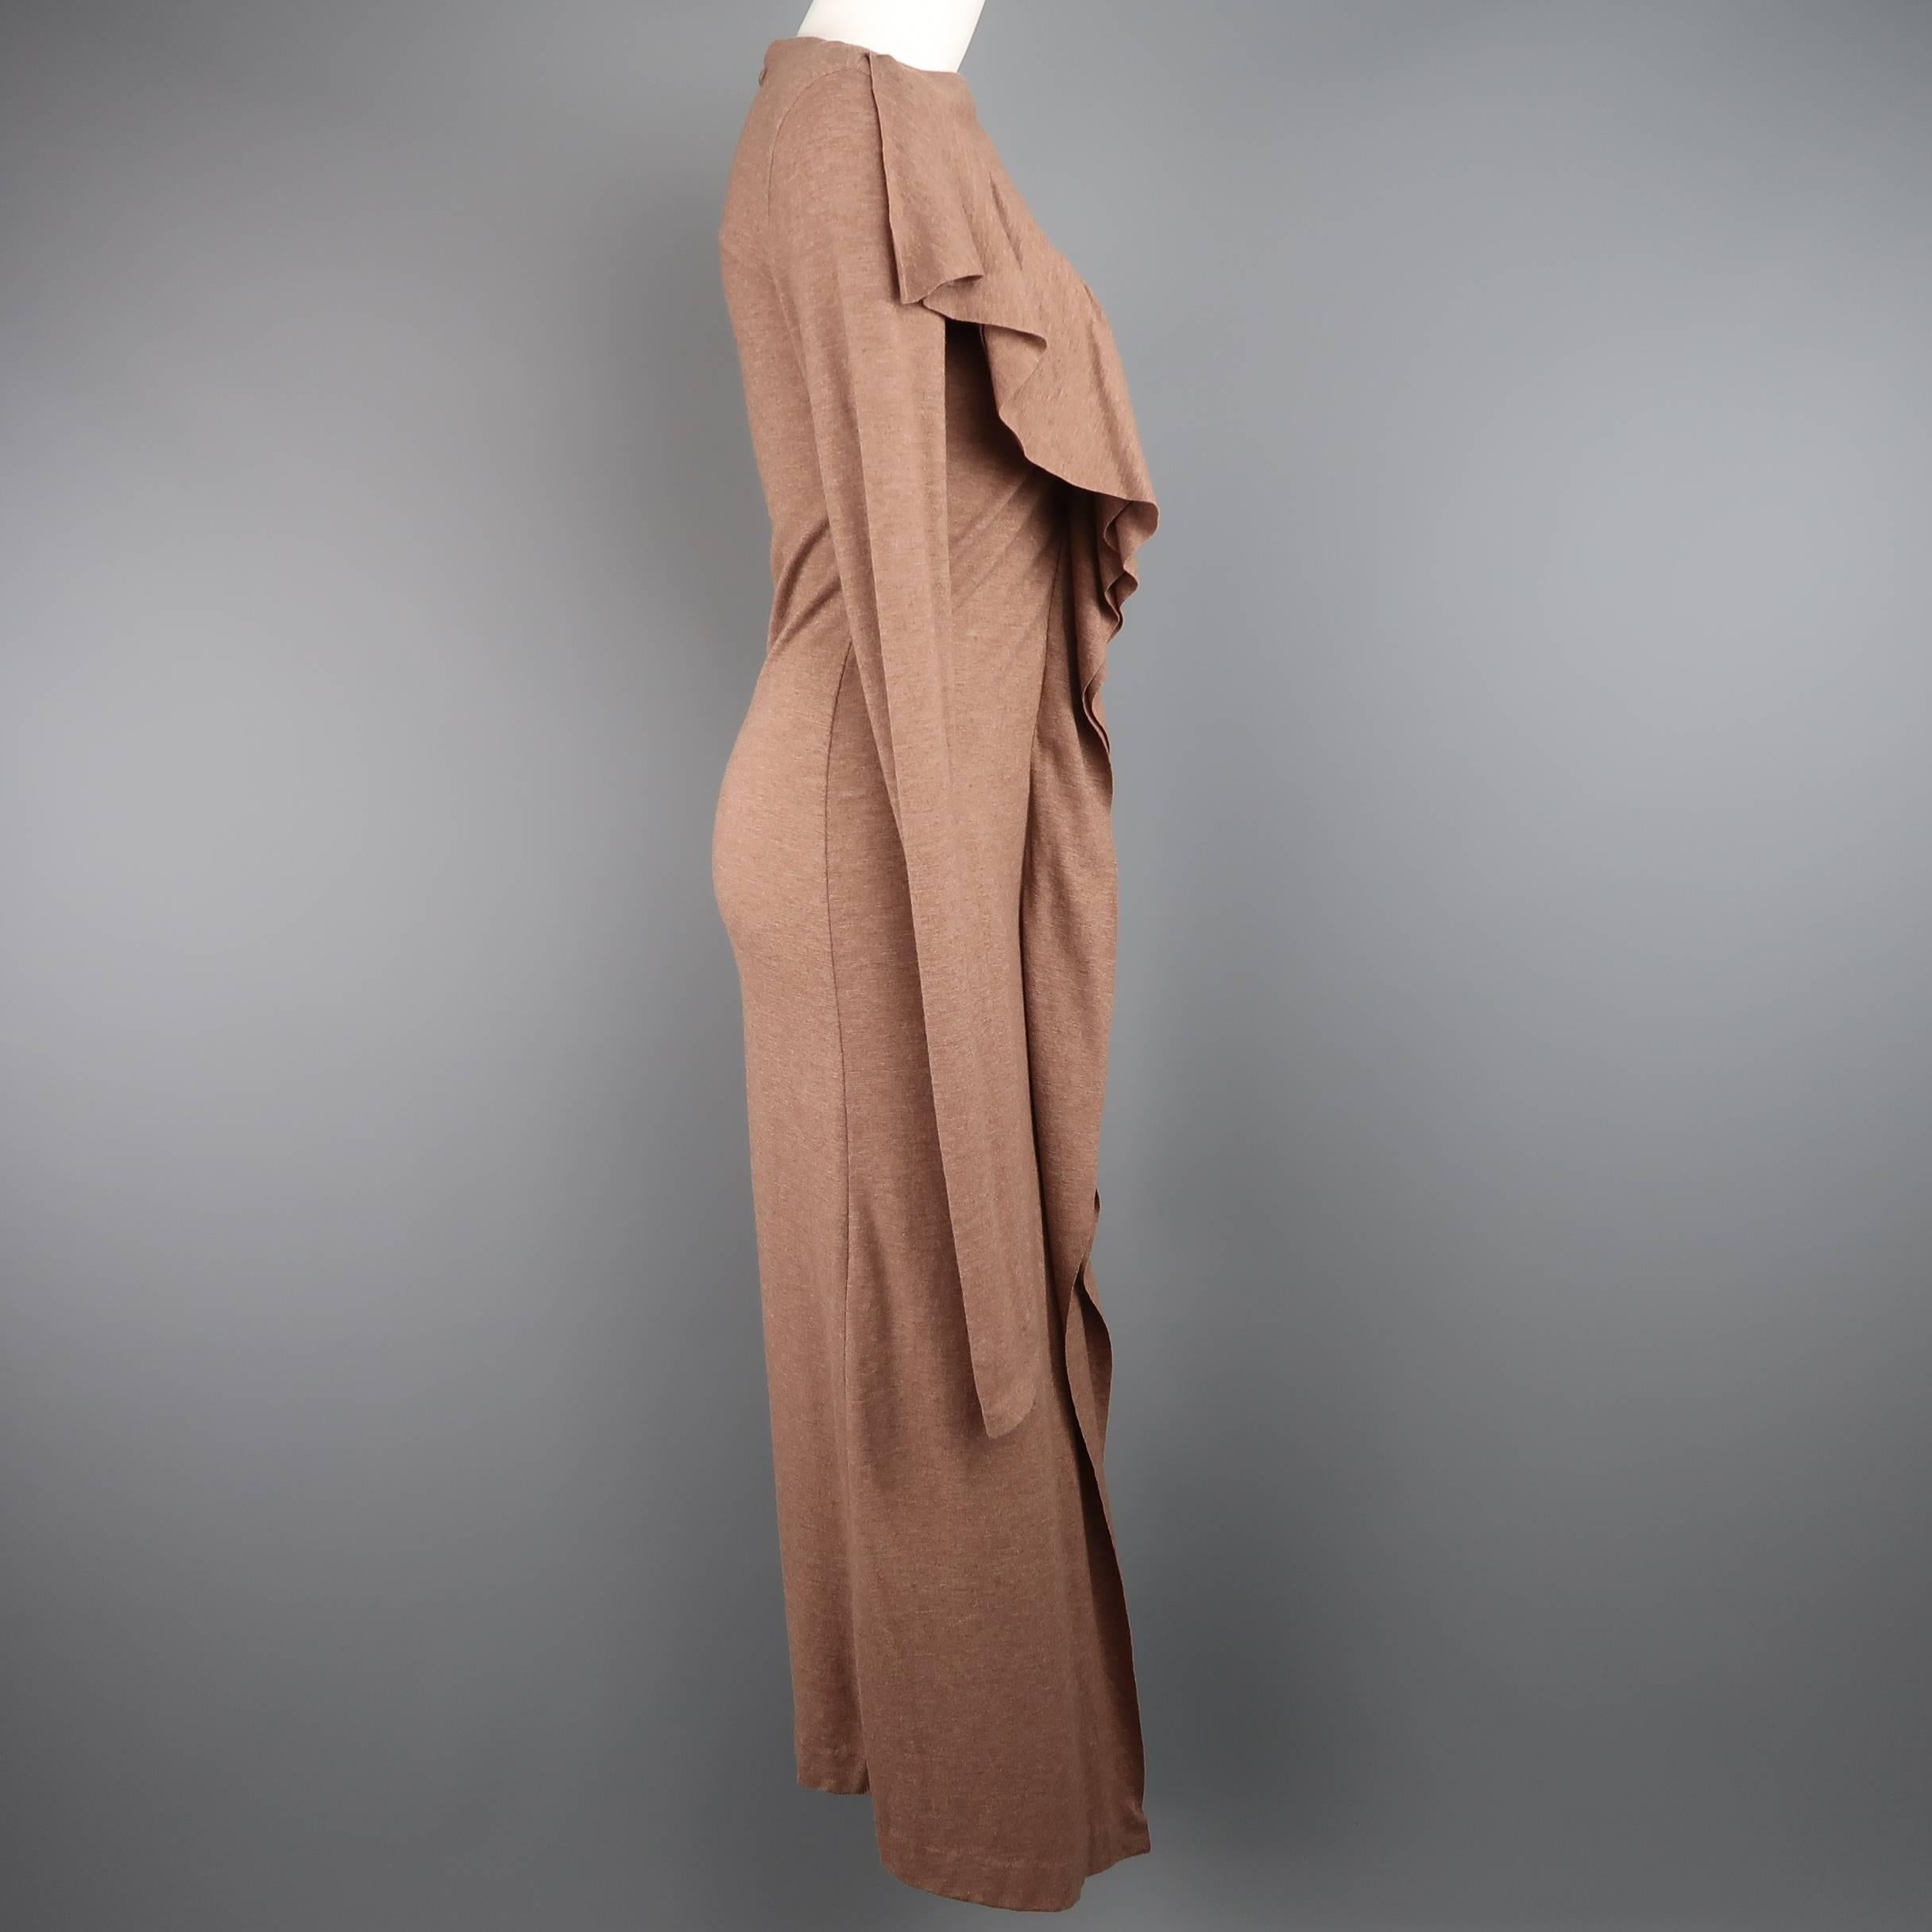 Women's JEAN PAUL GAULTIER Size 8 Tan Wool/Rayon Ruffle Long Sleeve Maxi Dress